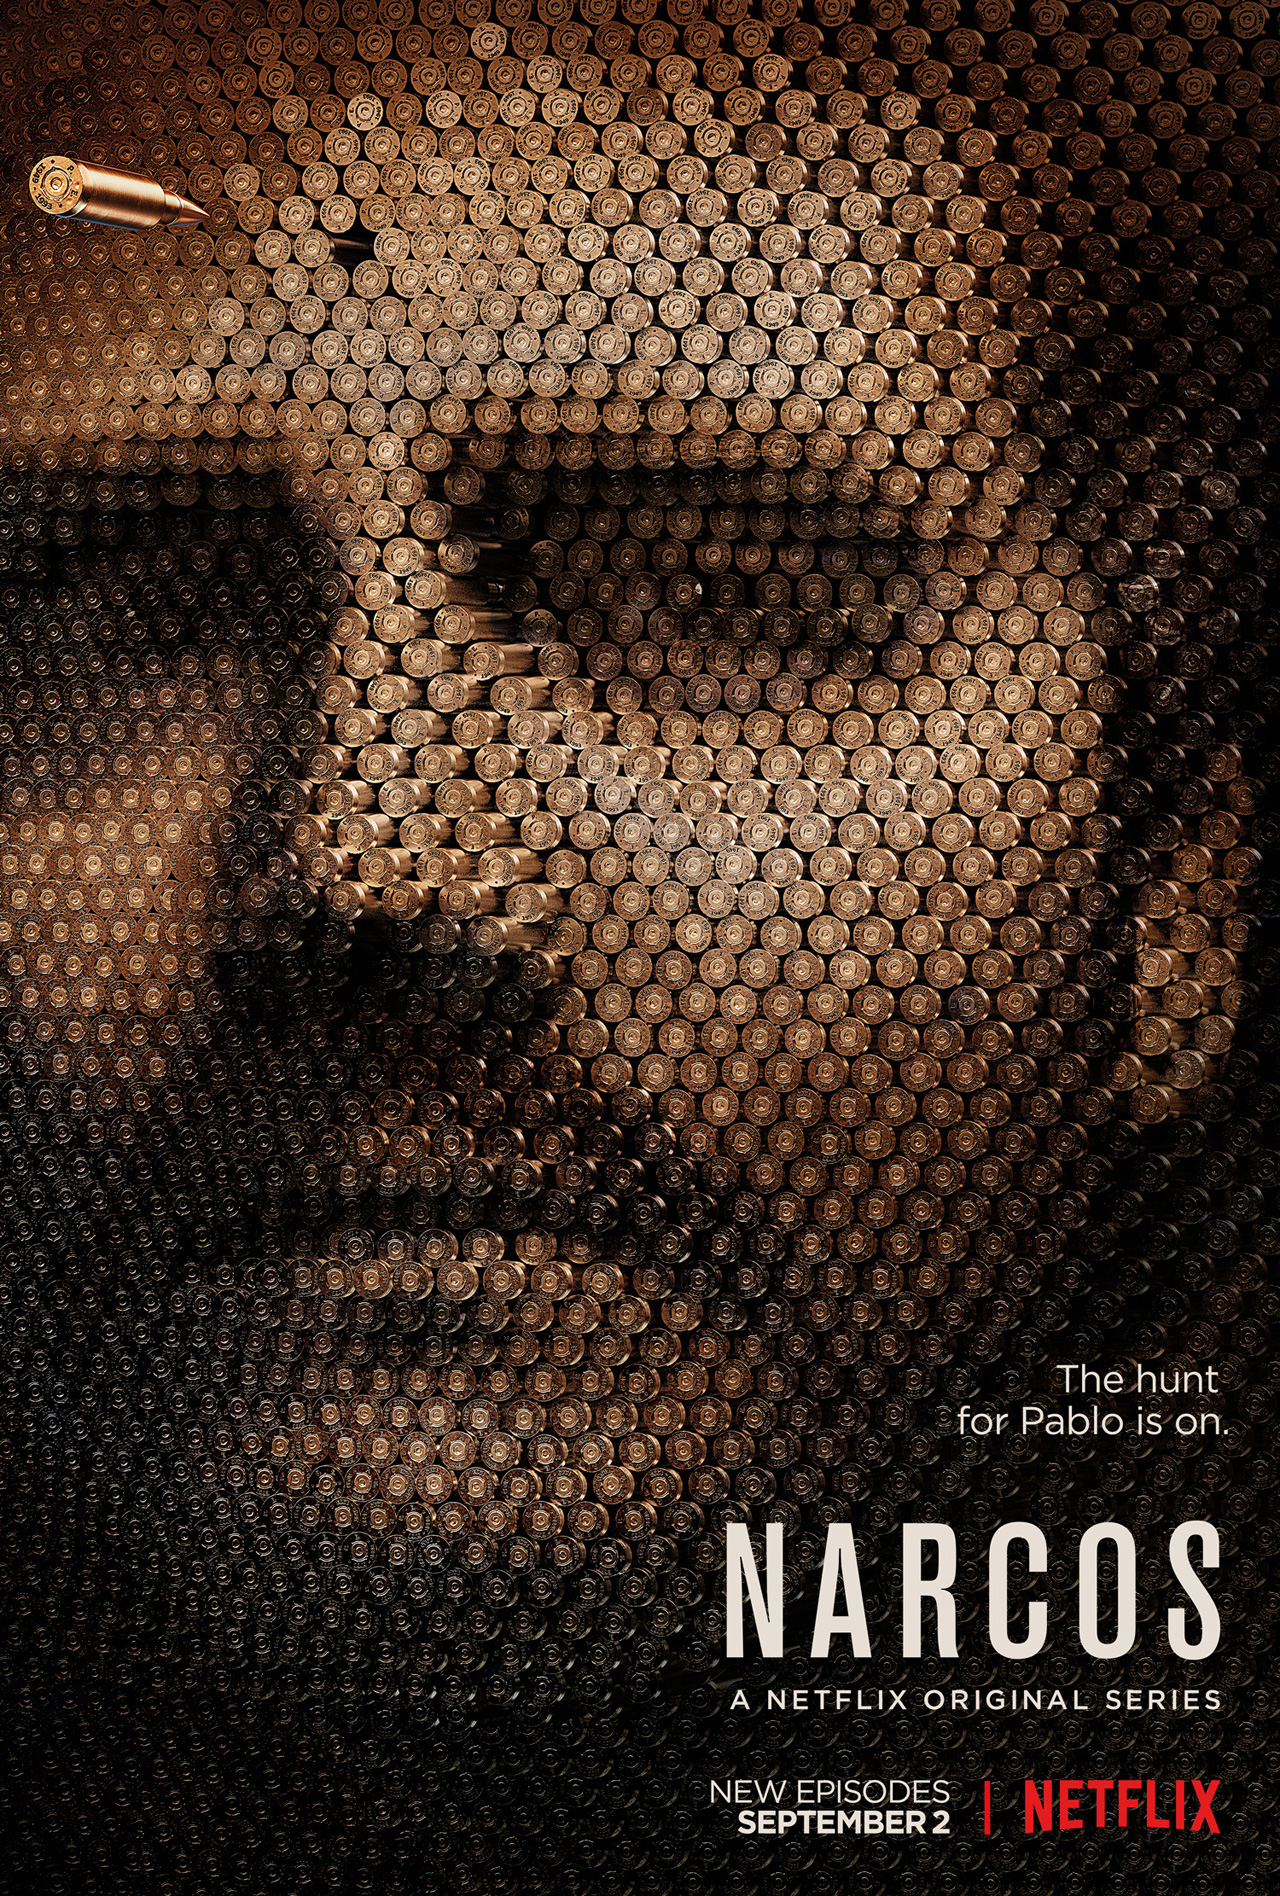 narcos season 1 complete kickass